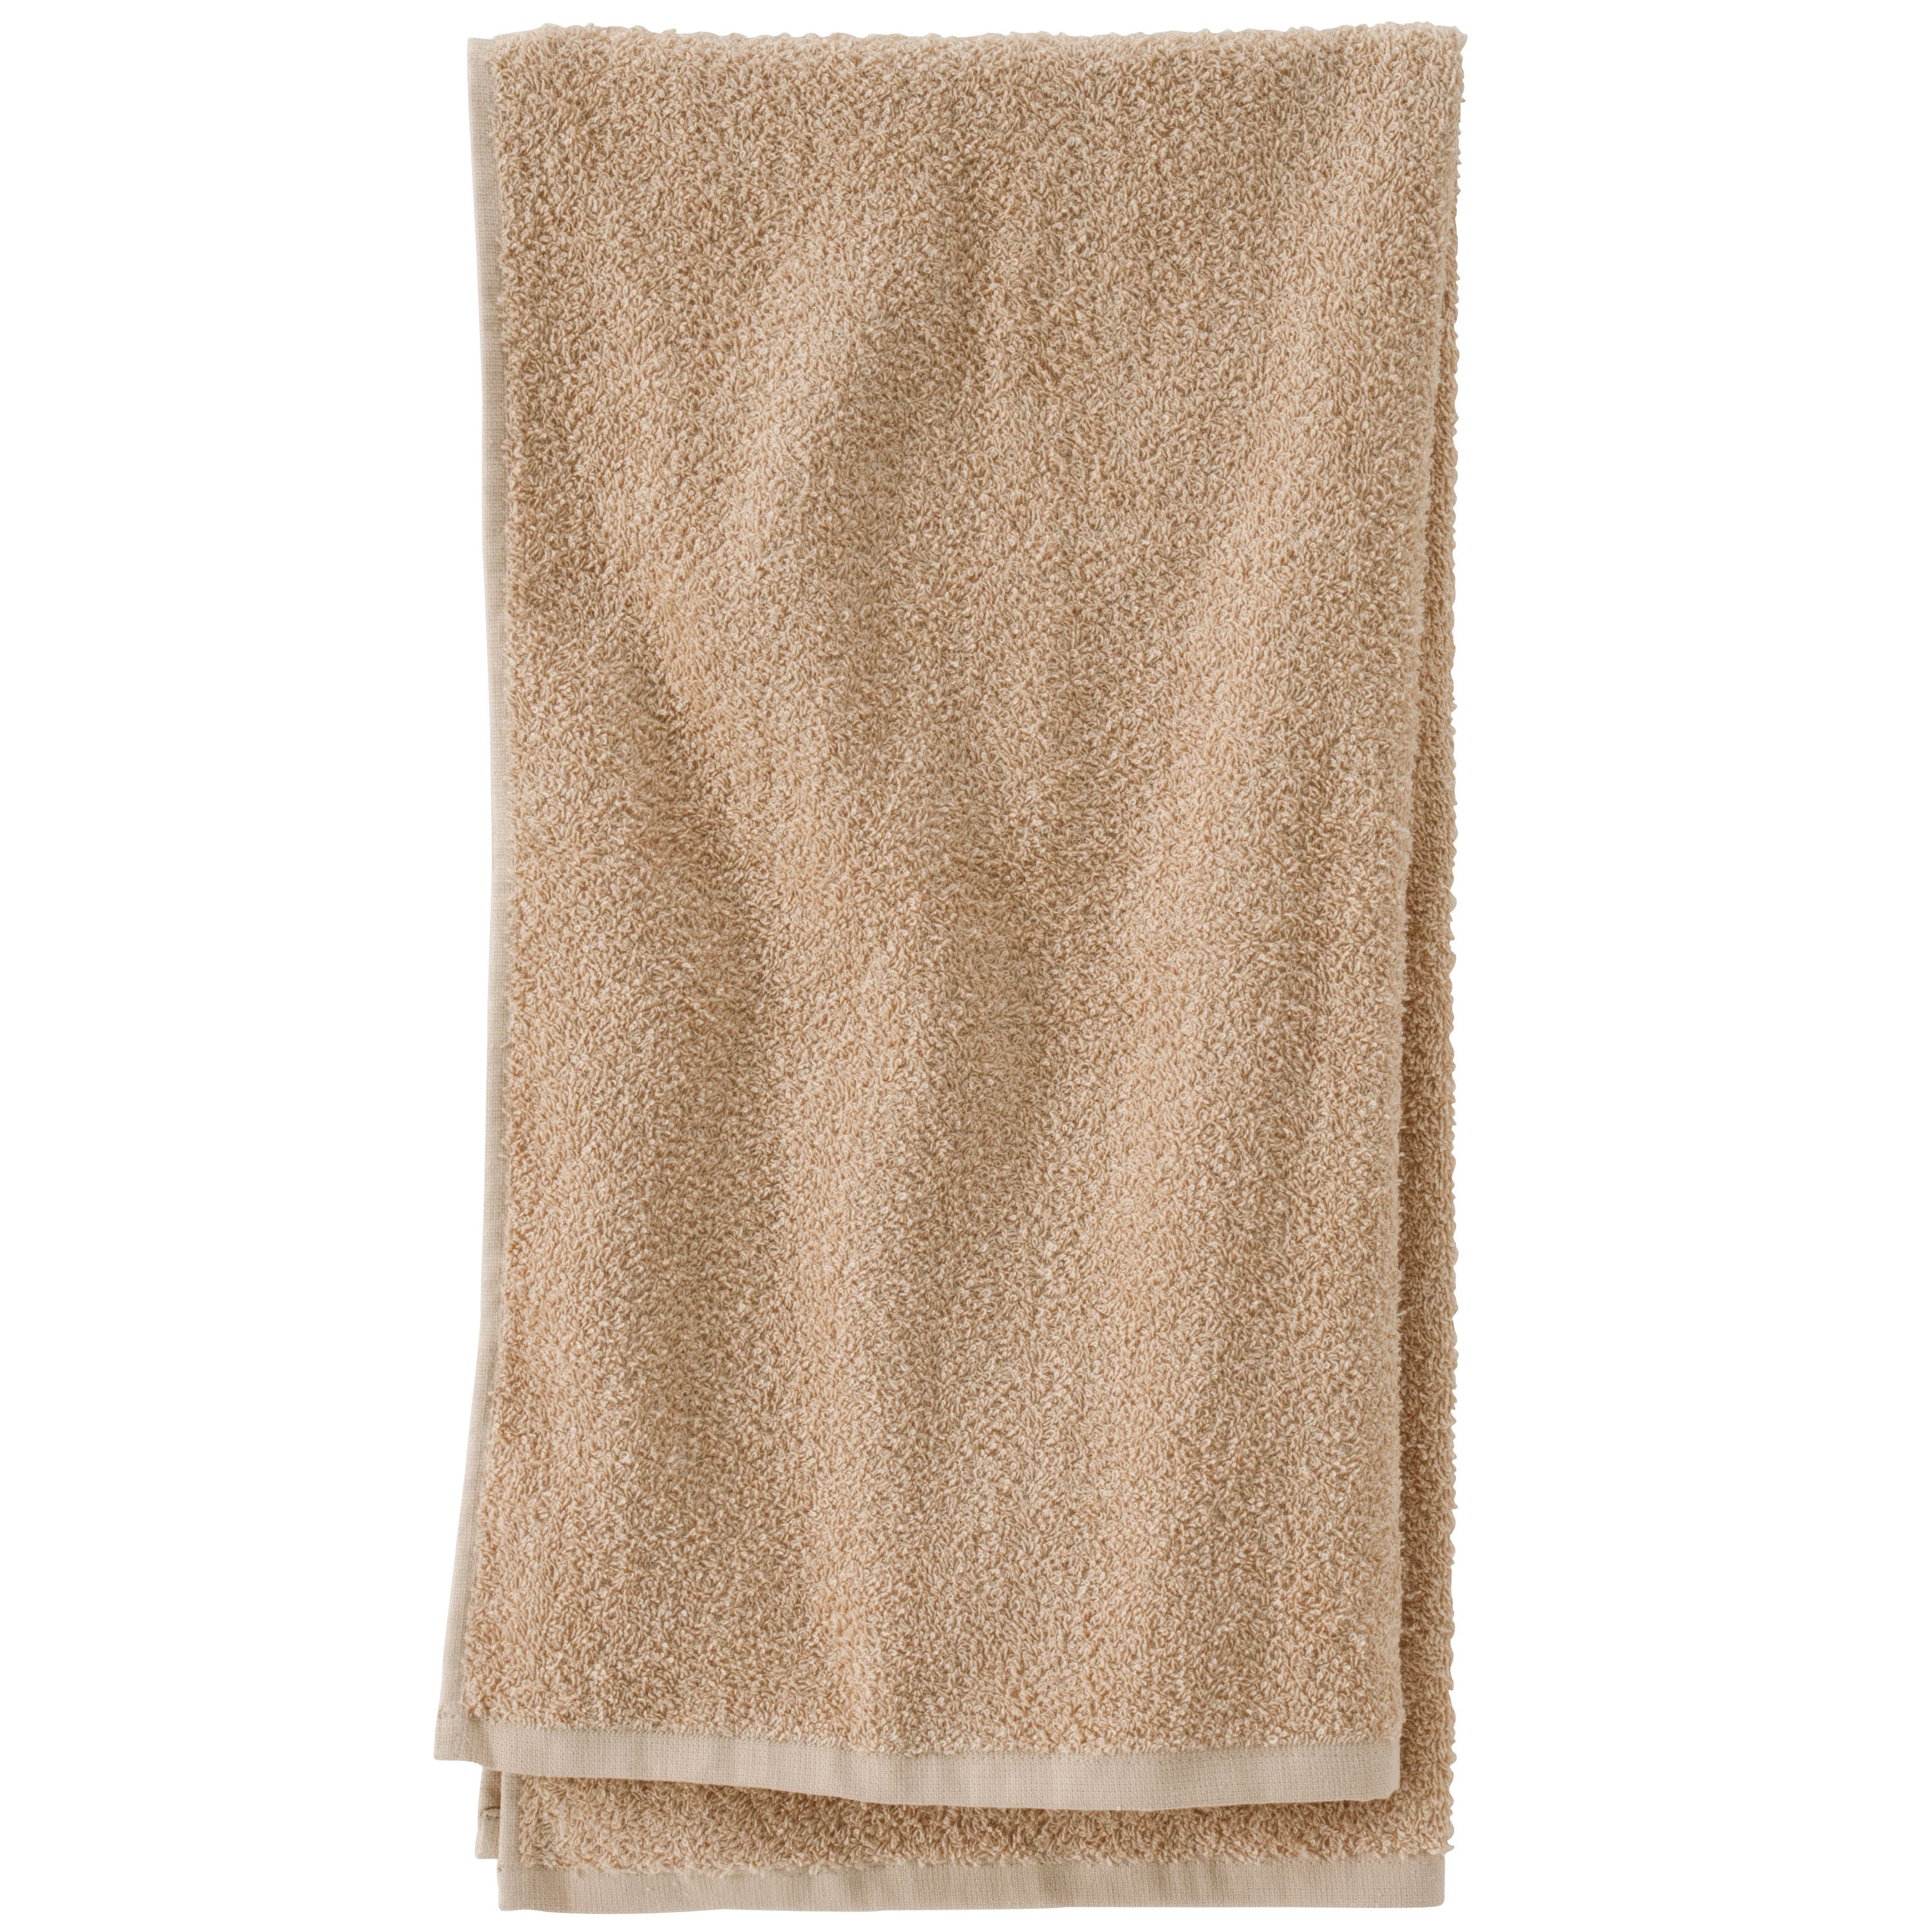 Mainstays Bath Towel, Tan - image 1 of 2